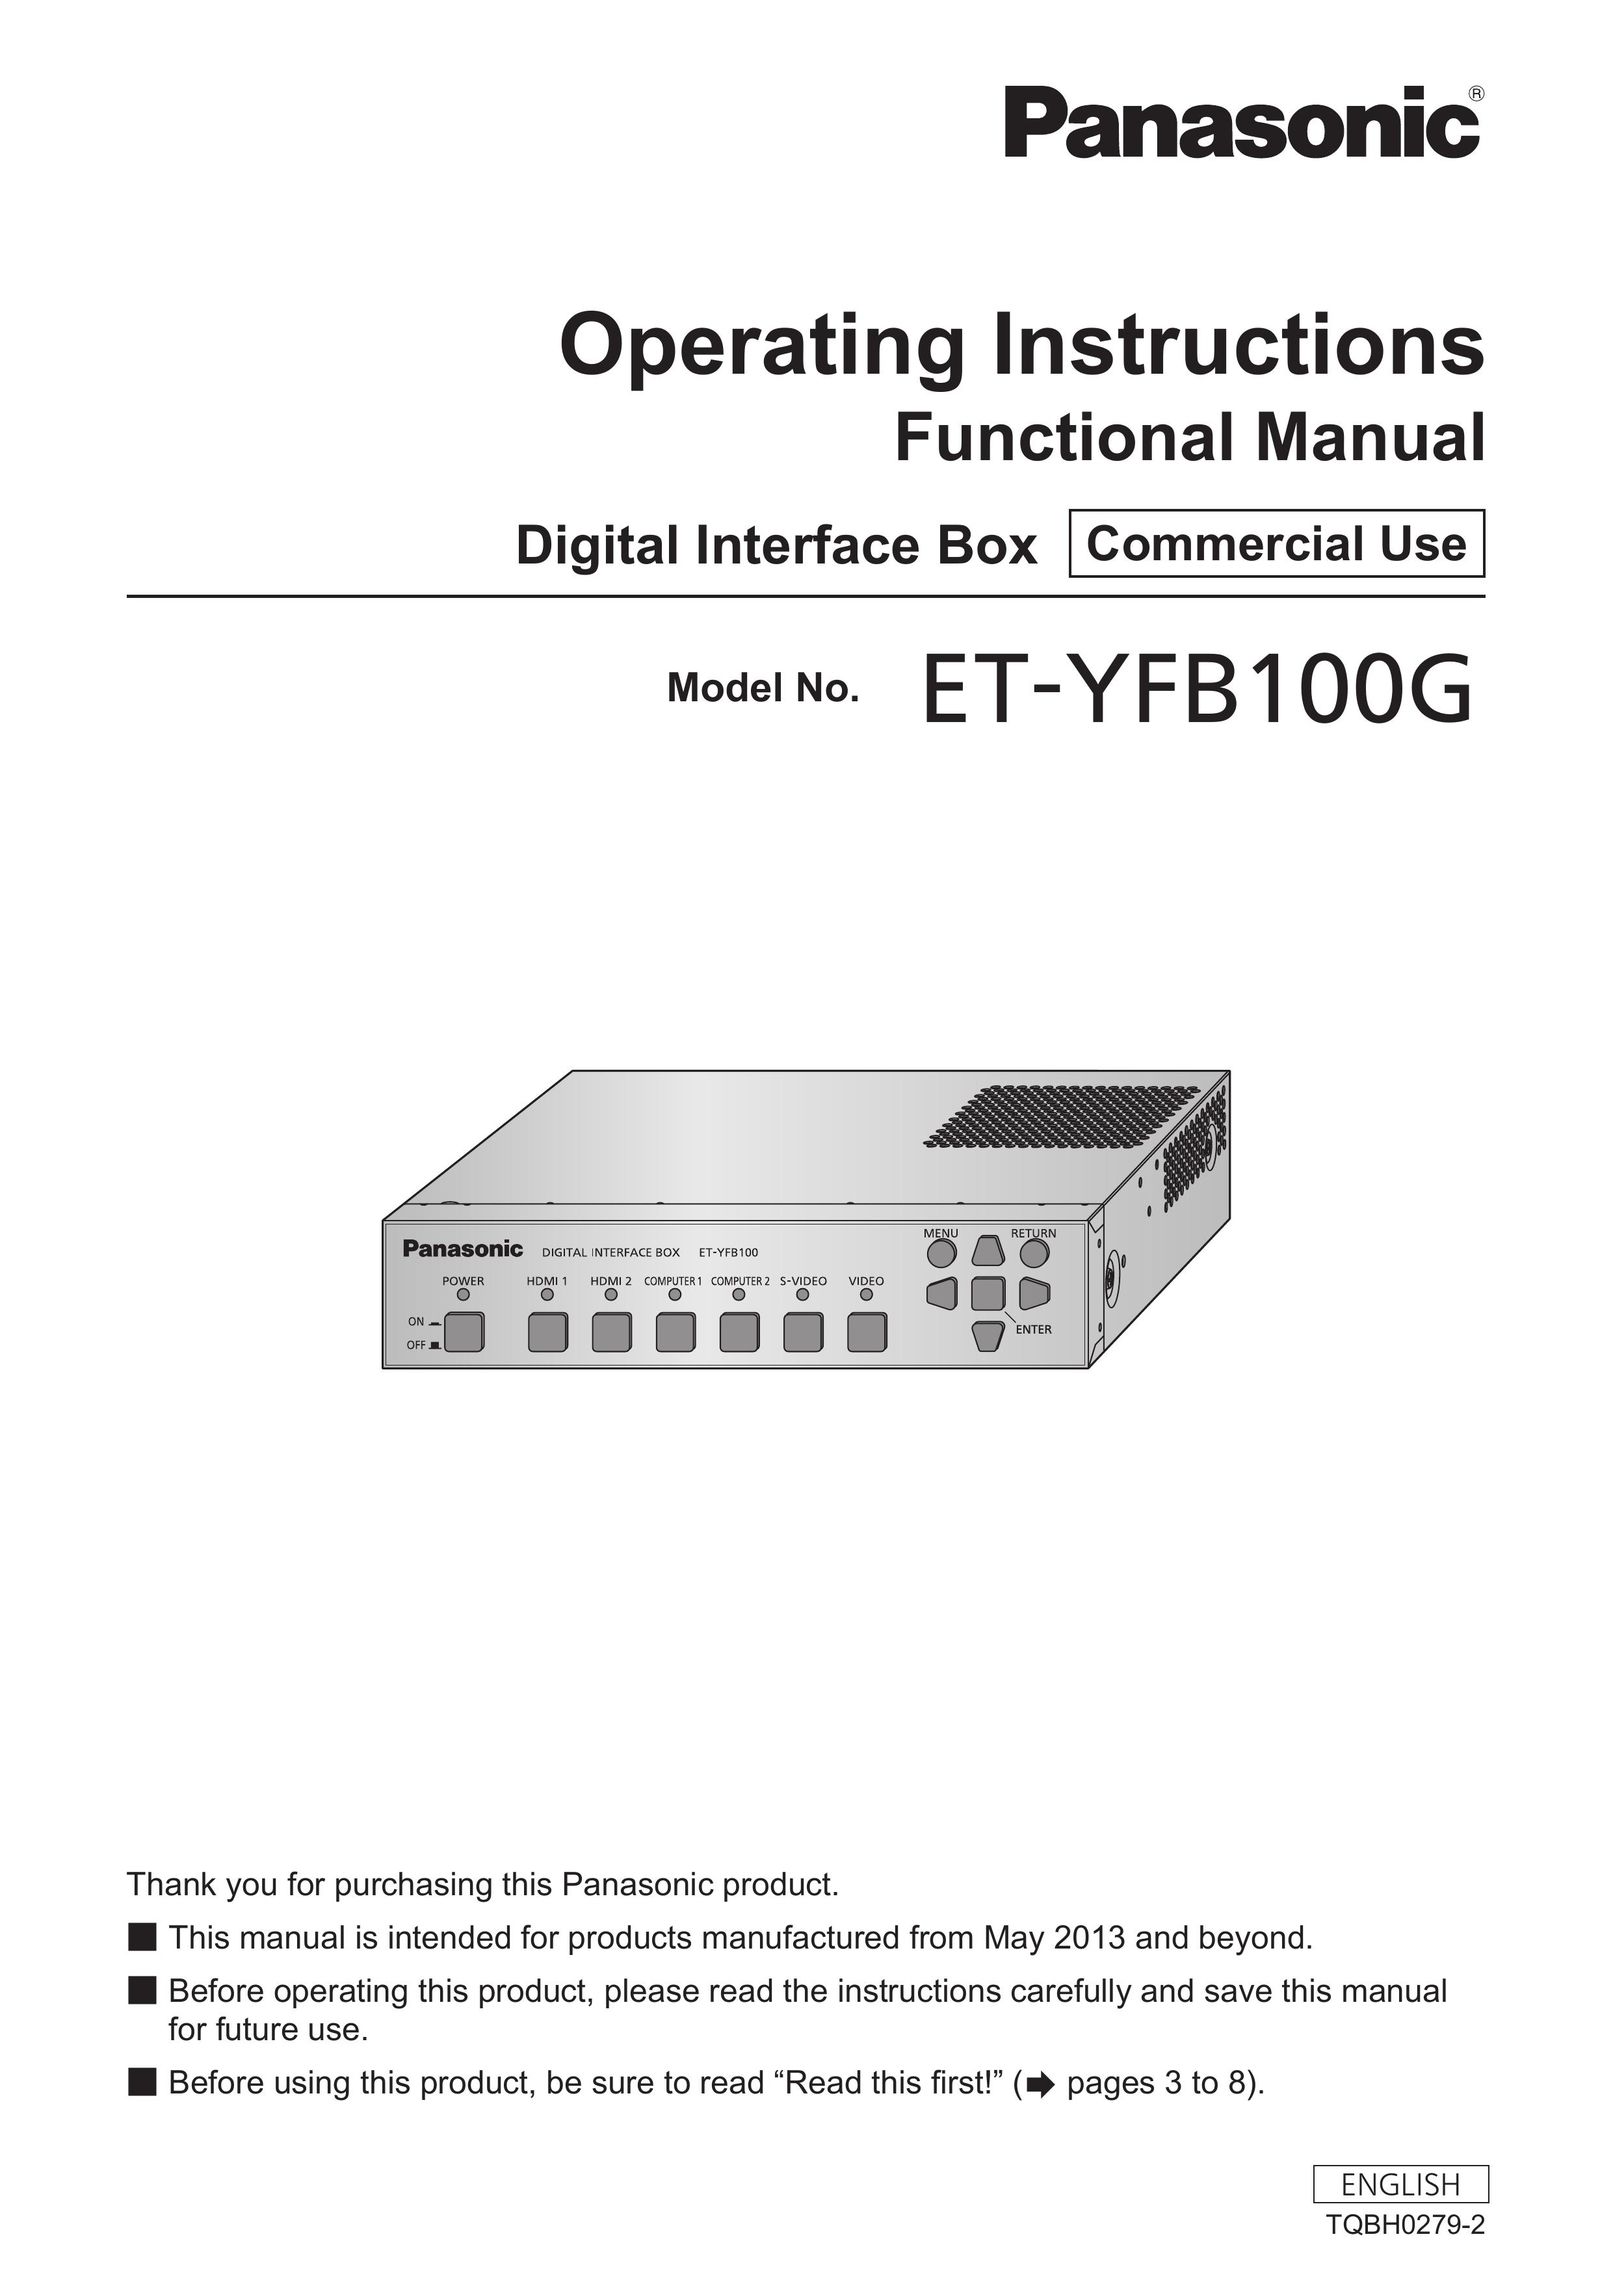 Panasonic ETYFB100G Cable Box User Manual